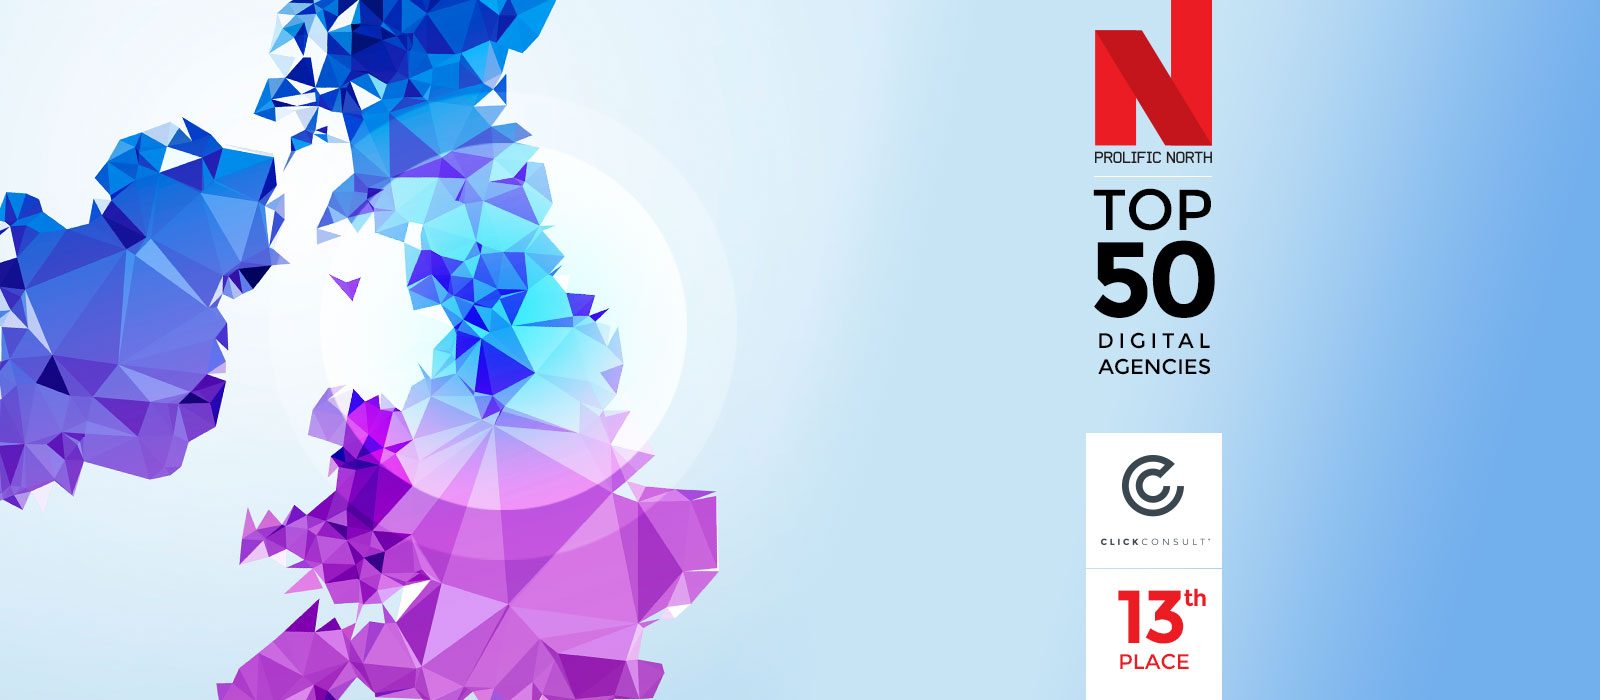 prolific north top 50 digital agencies